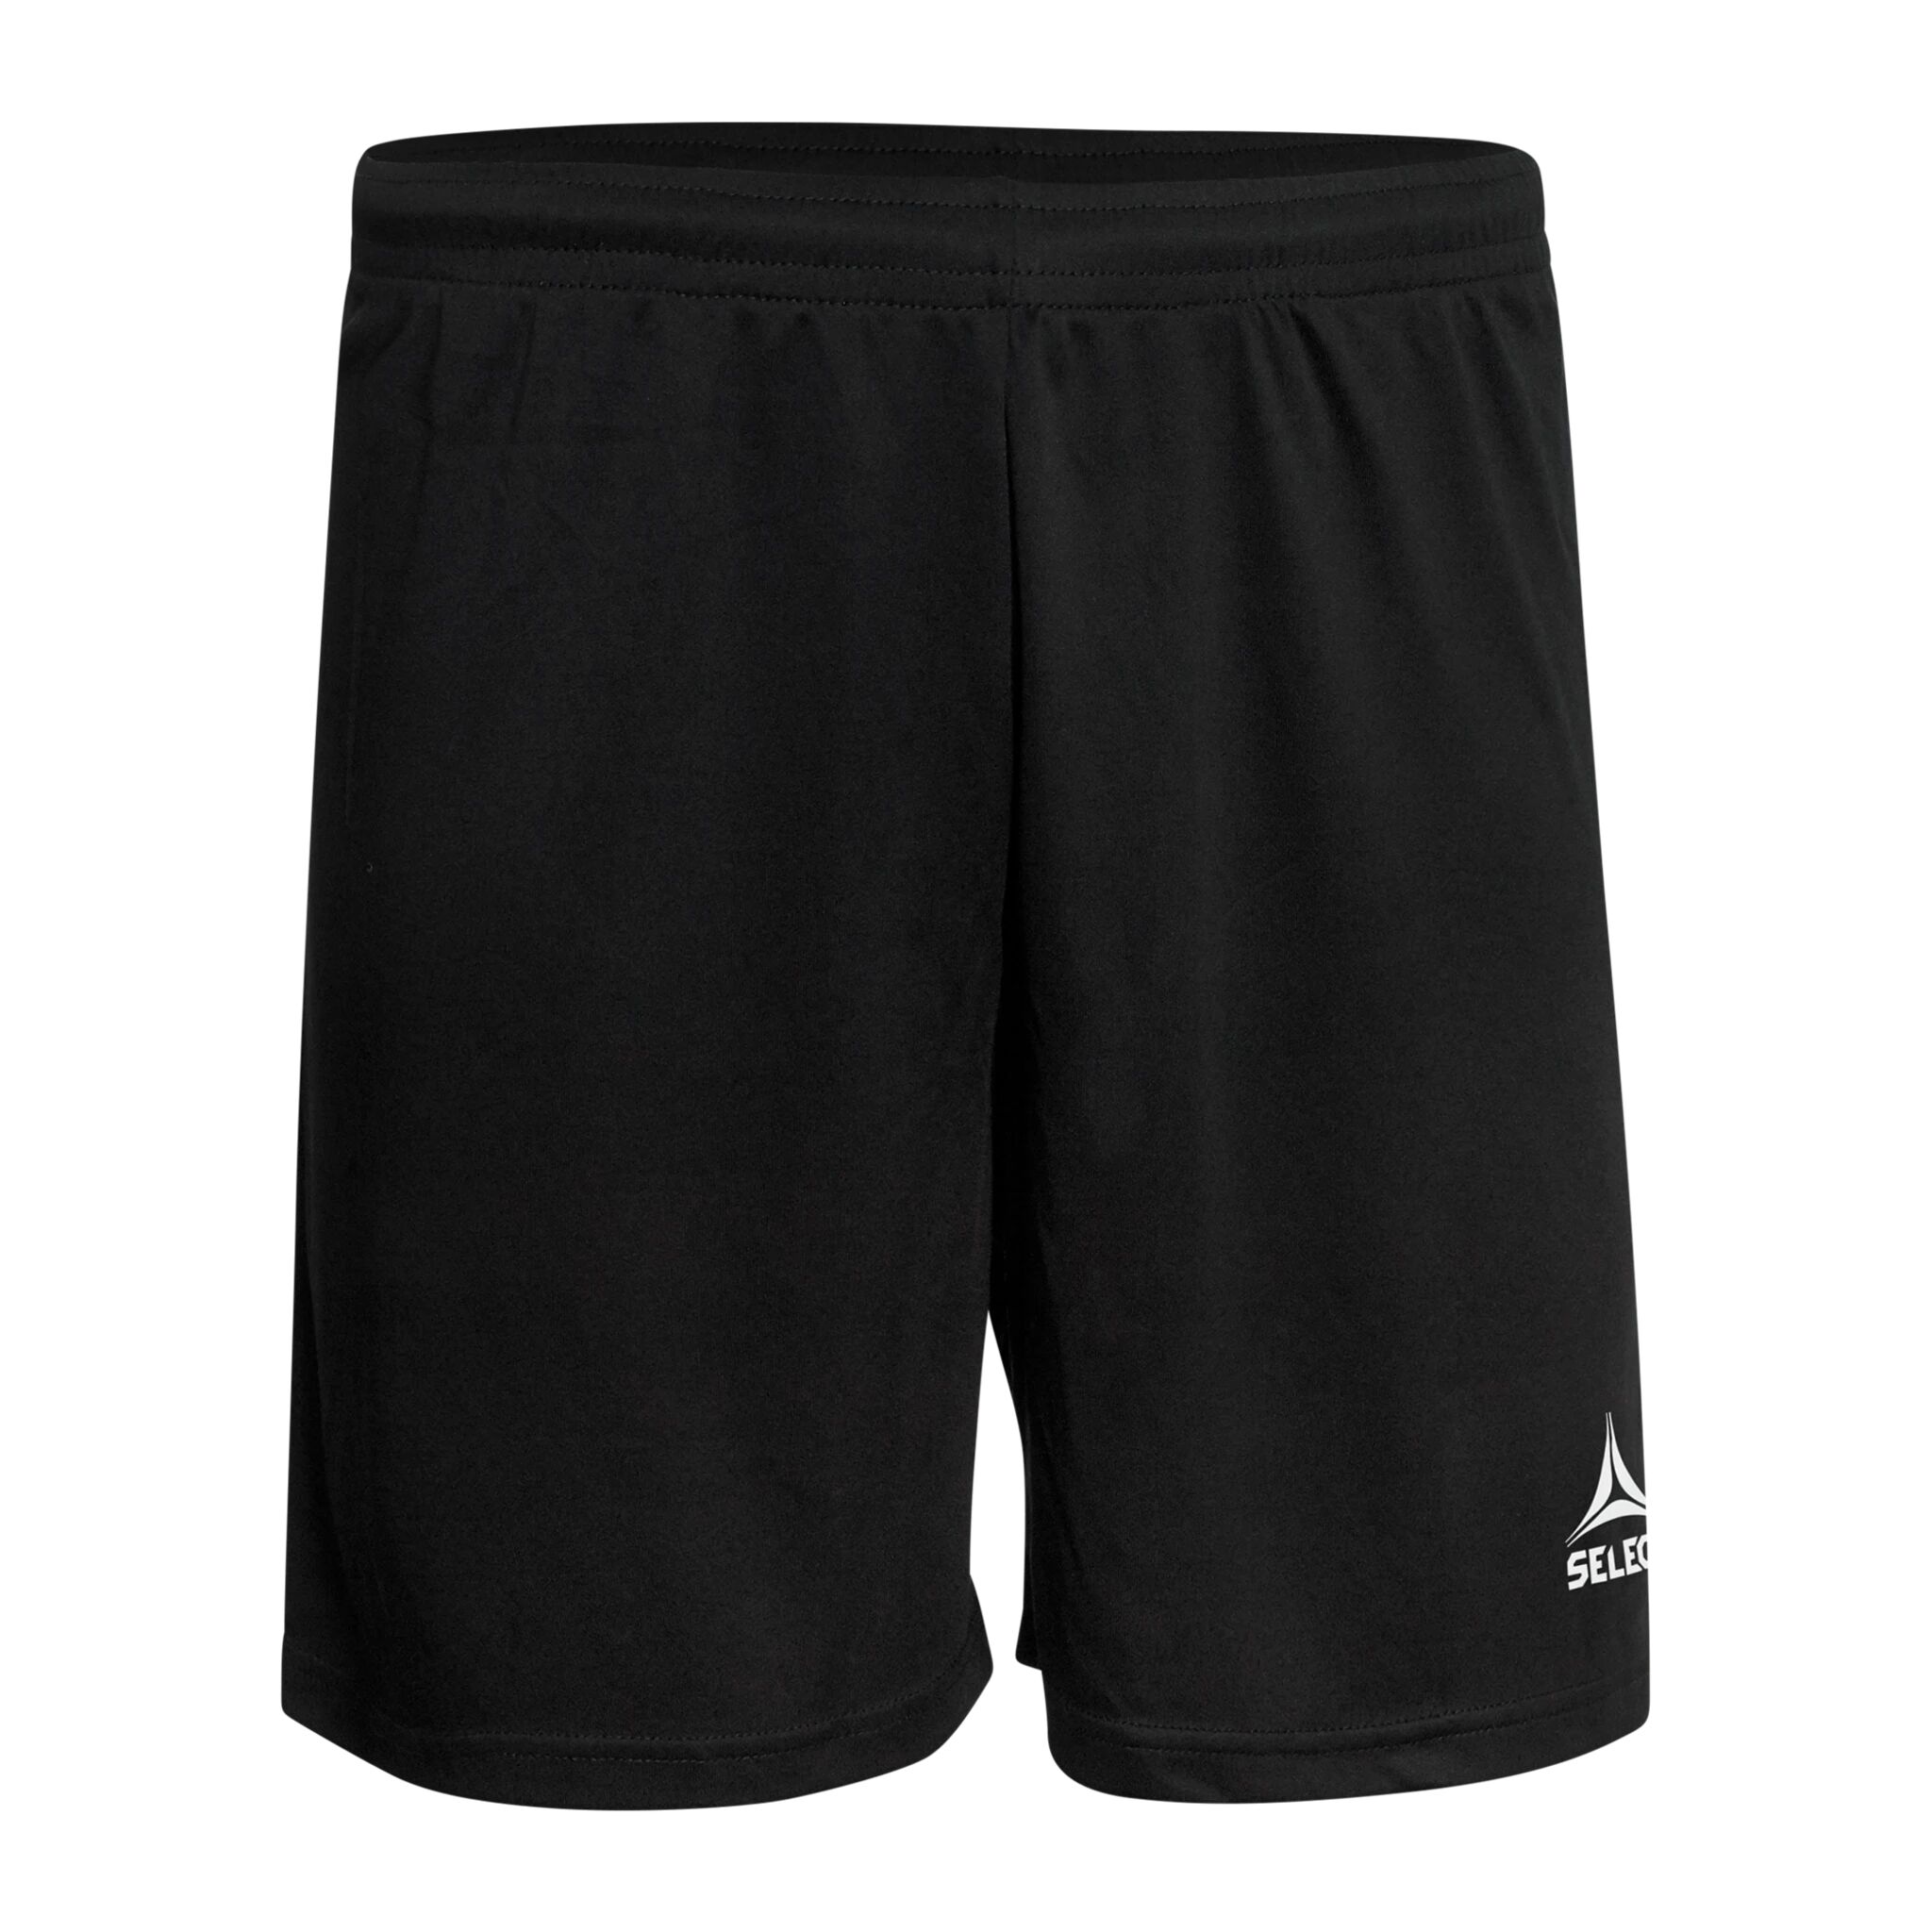 Select Player shorts Pisa, shorts senior 128 BLACK